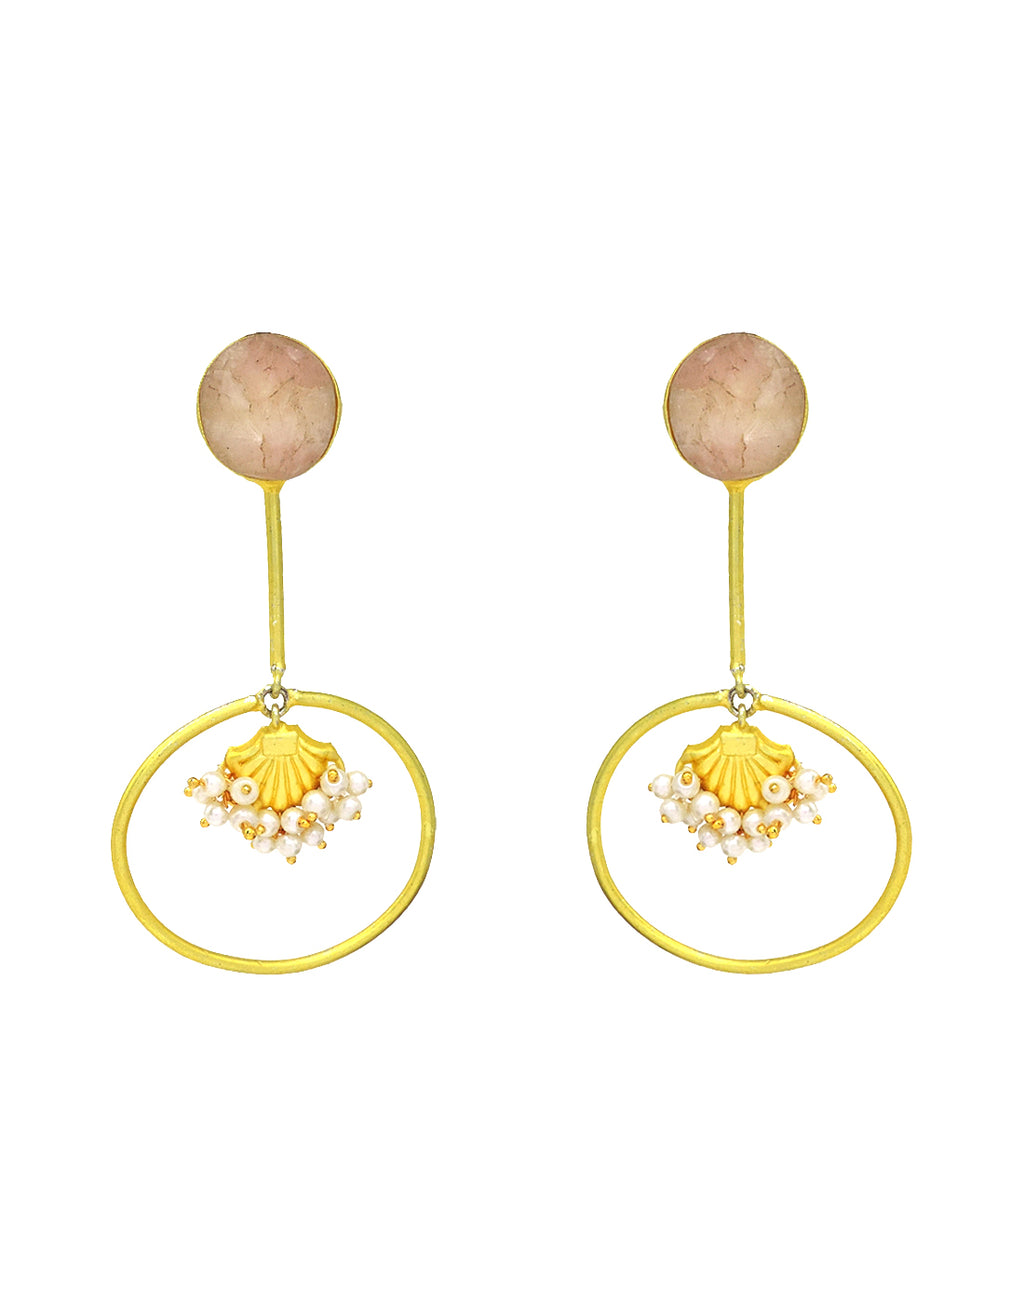 Stick Hoop Earrings (Rose Quartz) - Statement Earrings - Gold-Plated & Hypoallergenic - Made in India - Dubai Jewellery - Dori